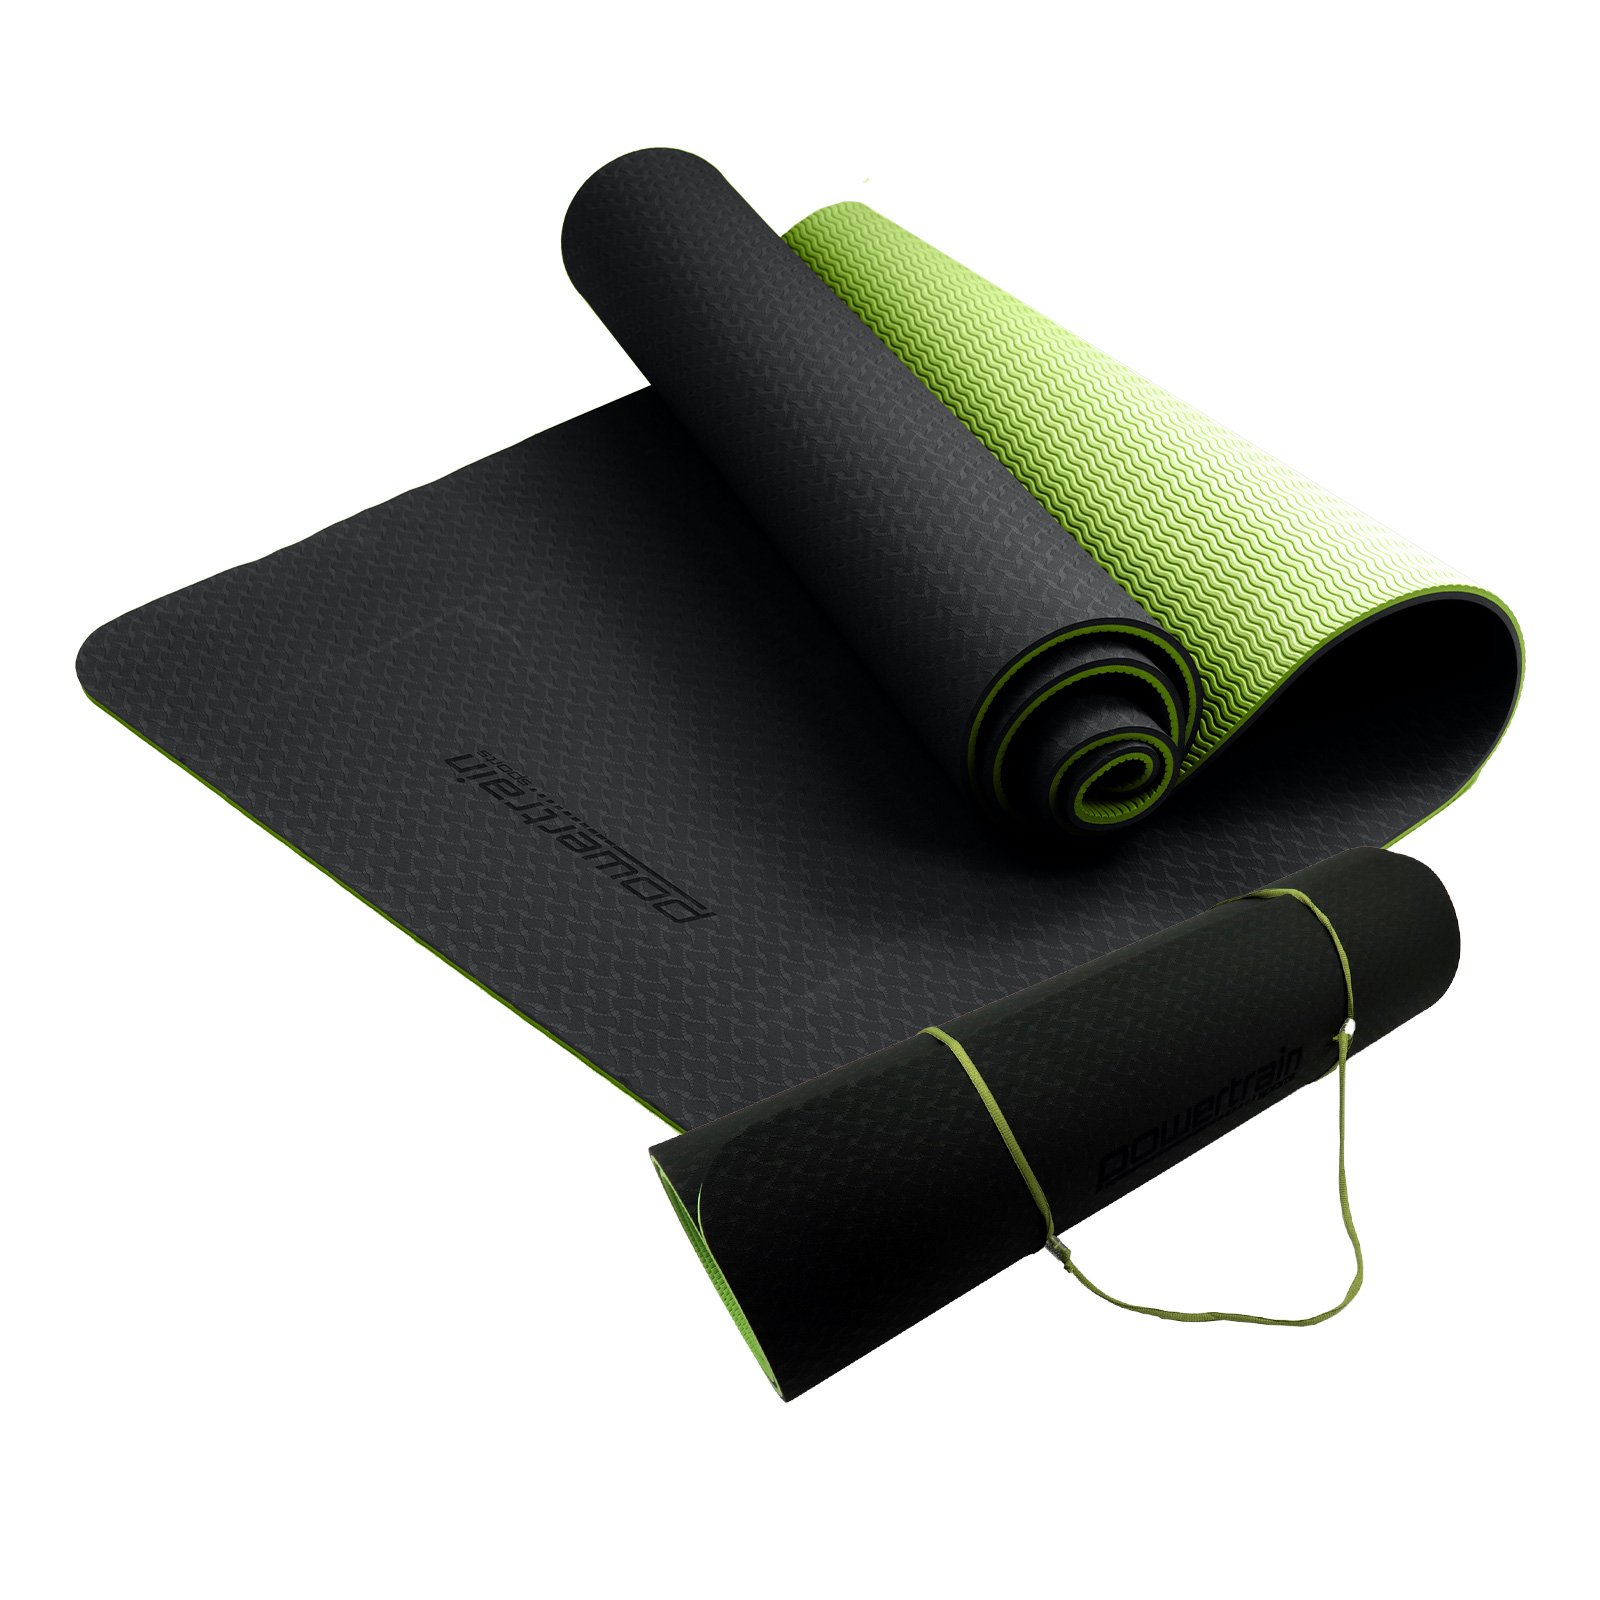 Powertrain Eco-Friendly TPE Pilates Exercise Yoga Mat 8mm - Black Green 2